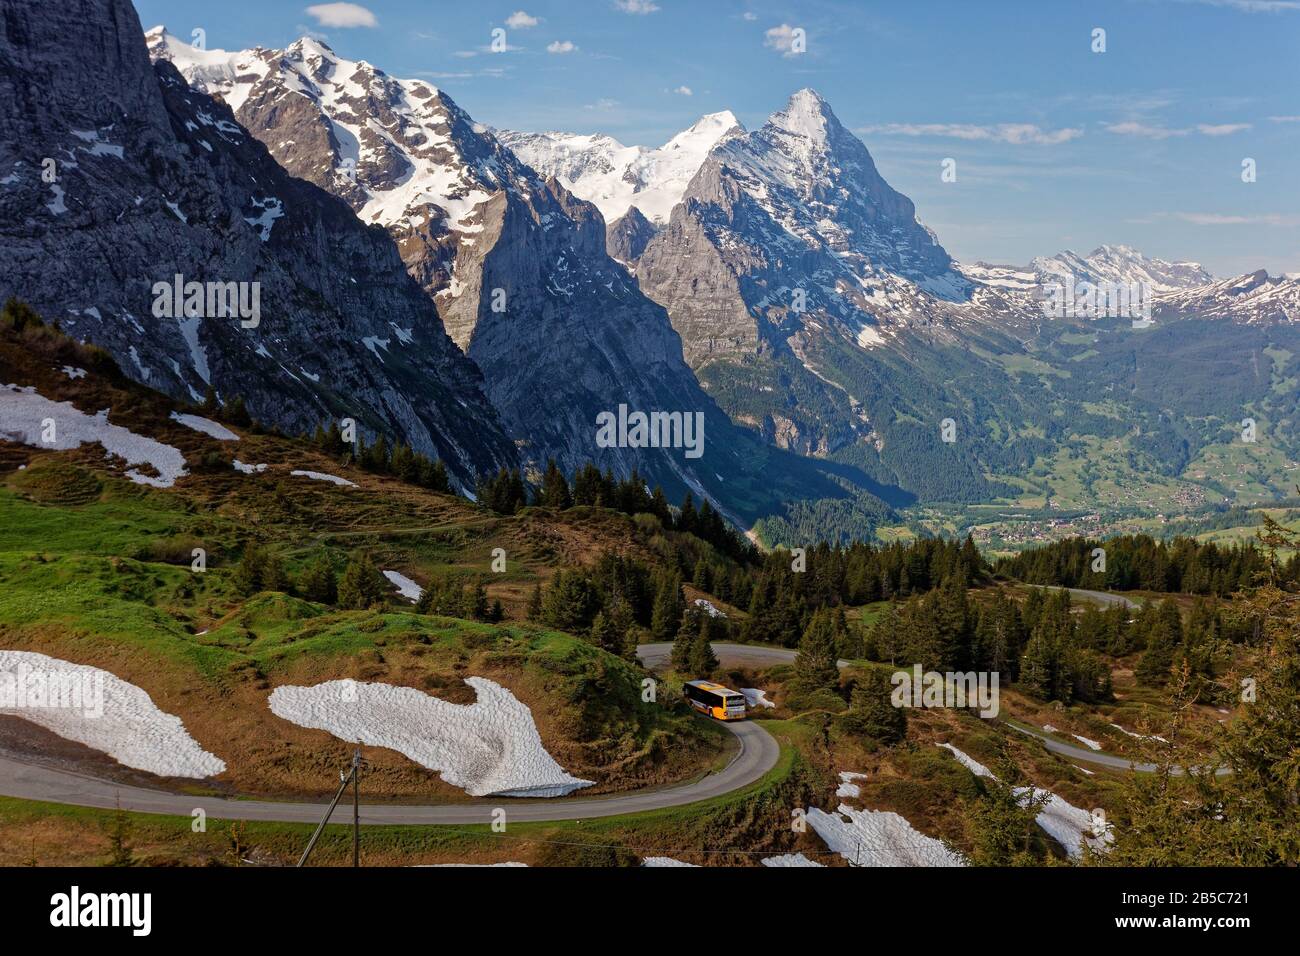 Grosse Scheidegg, Oberhasli, Bern, Switzerland - July 19, 2019: Swiss PostBus heading to Grindelwald with views of Eiger, Moench and Jungfrau massif Stock Photo